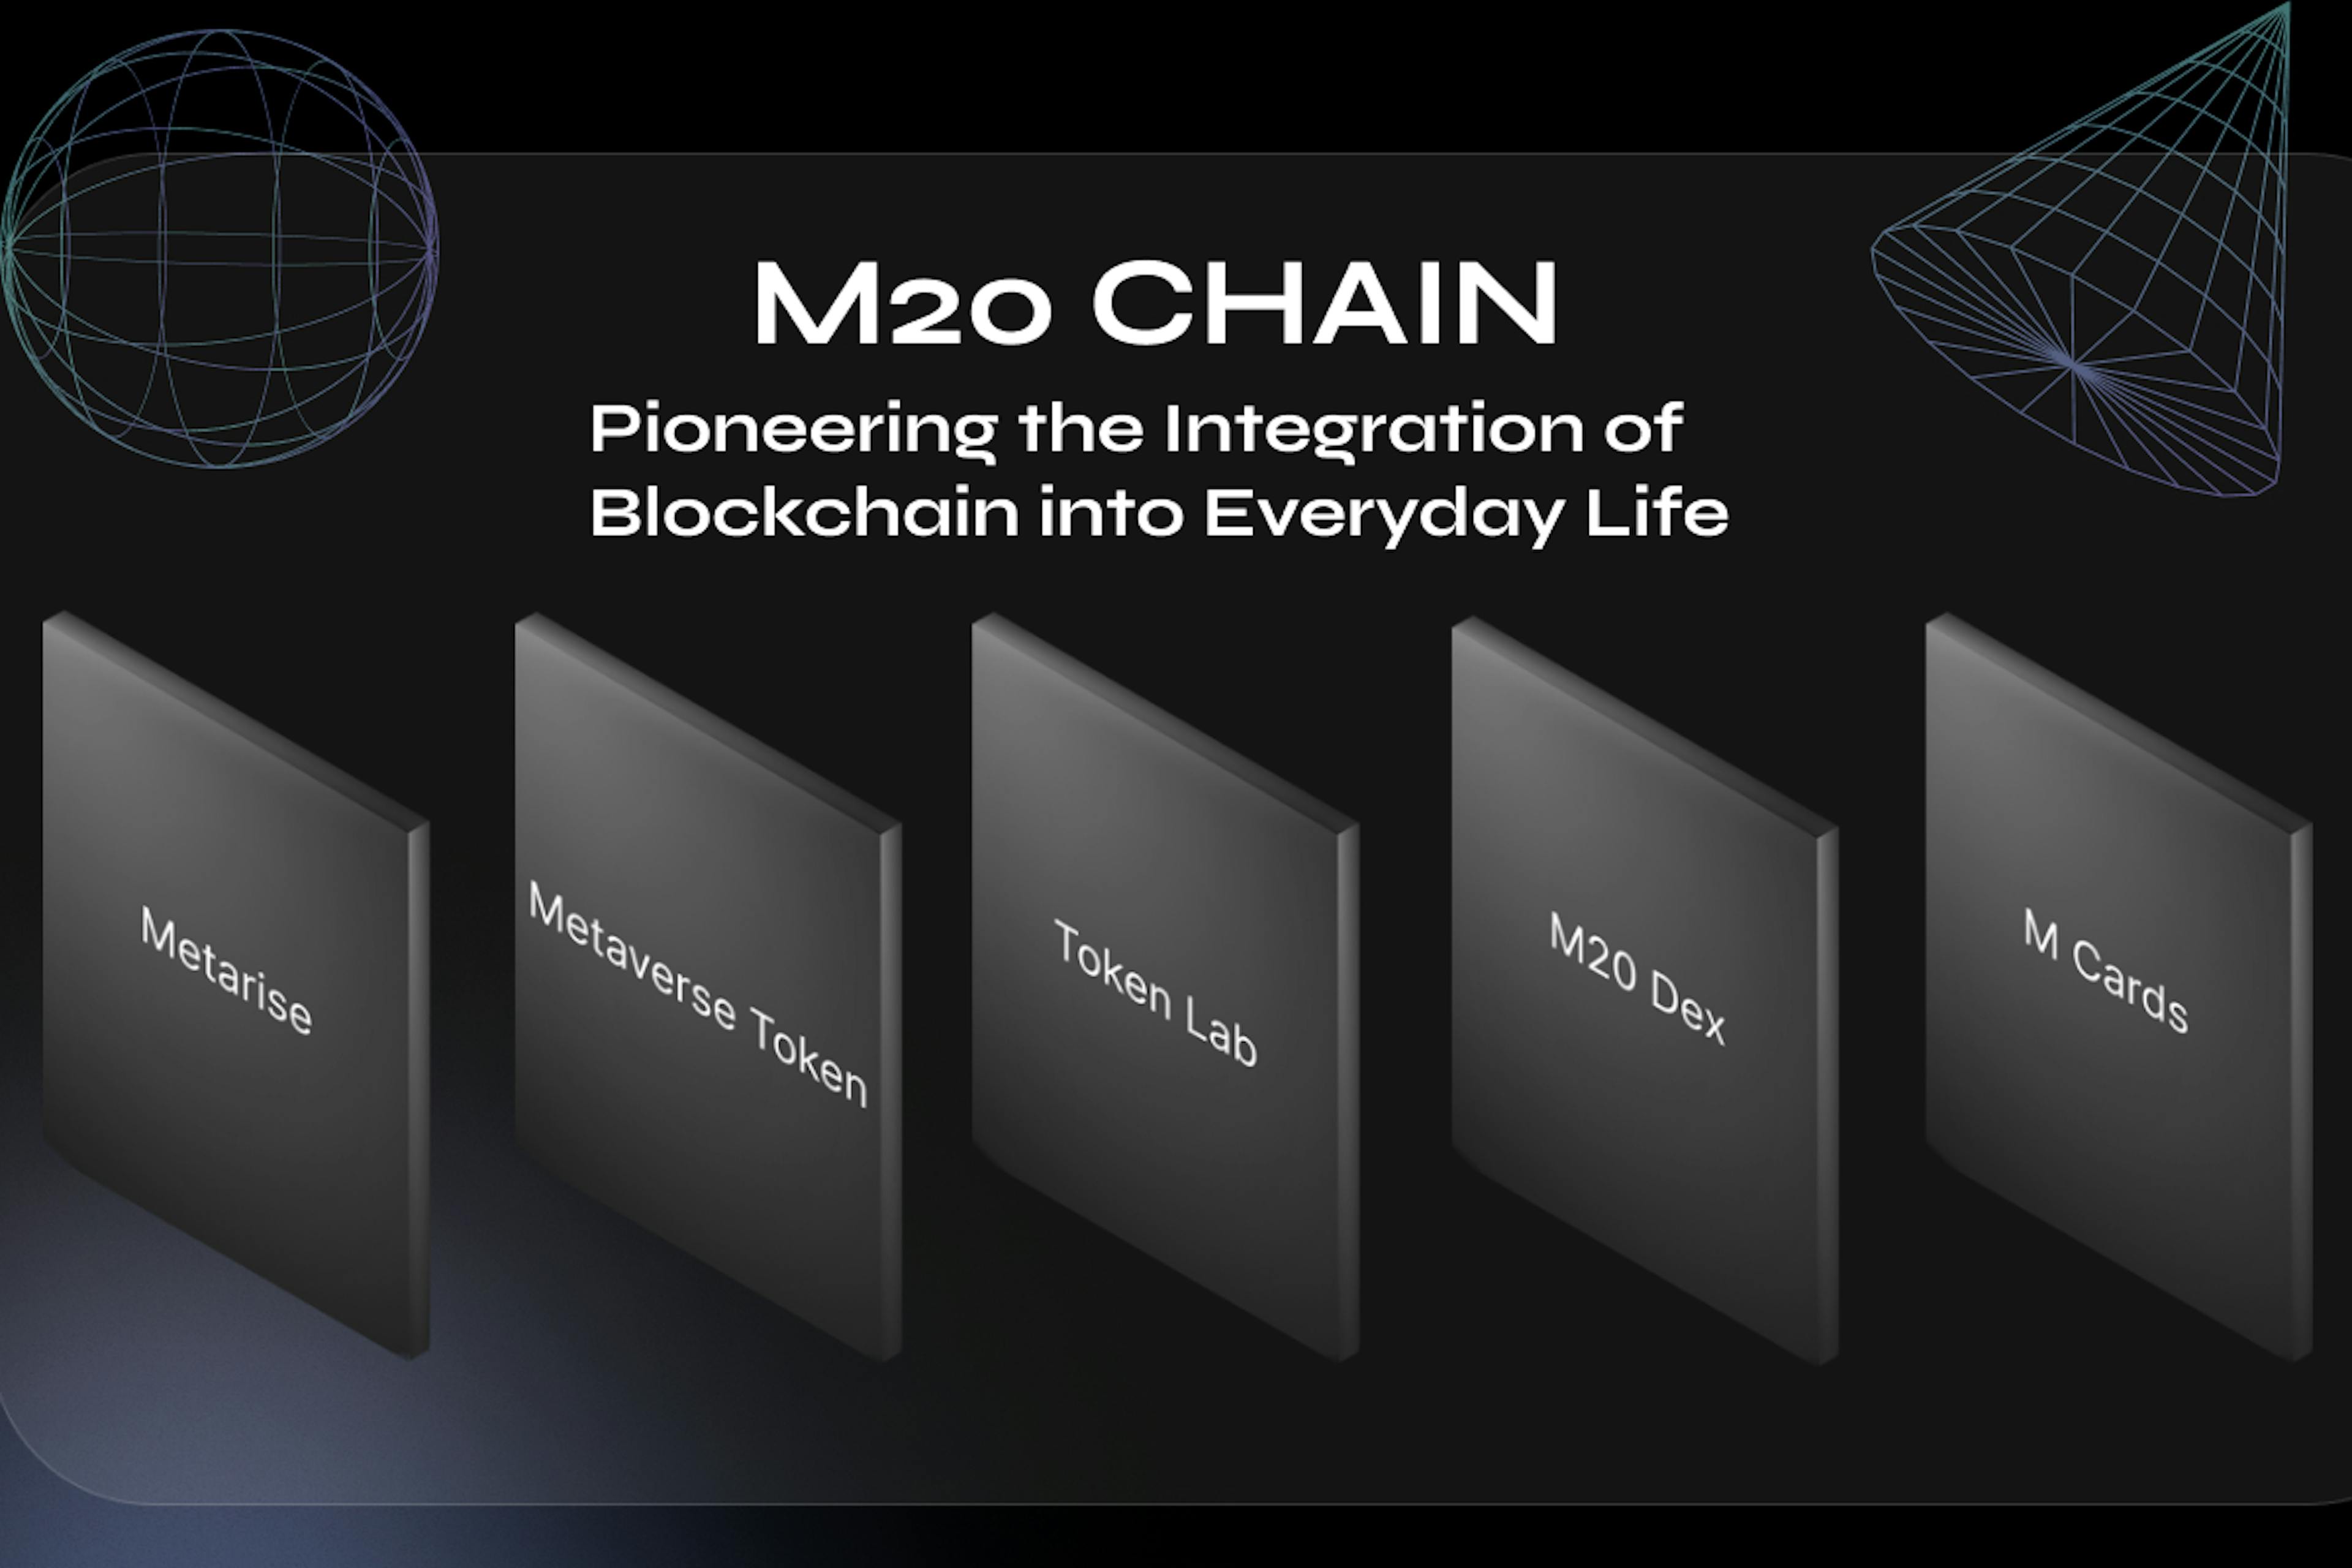 featured image - Revolucionando las transacciones digitales con M20 Blockchain